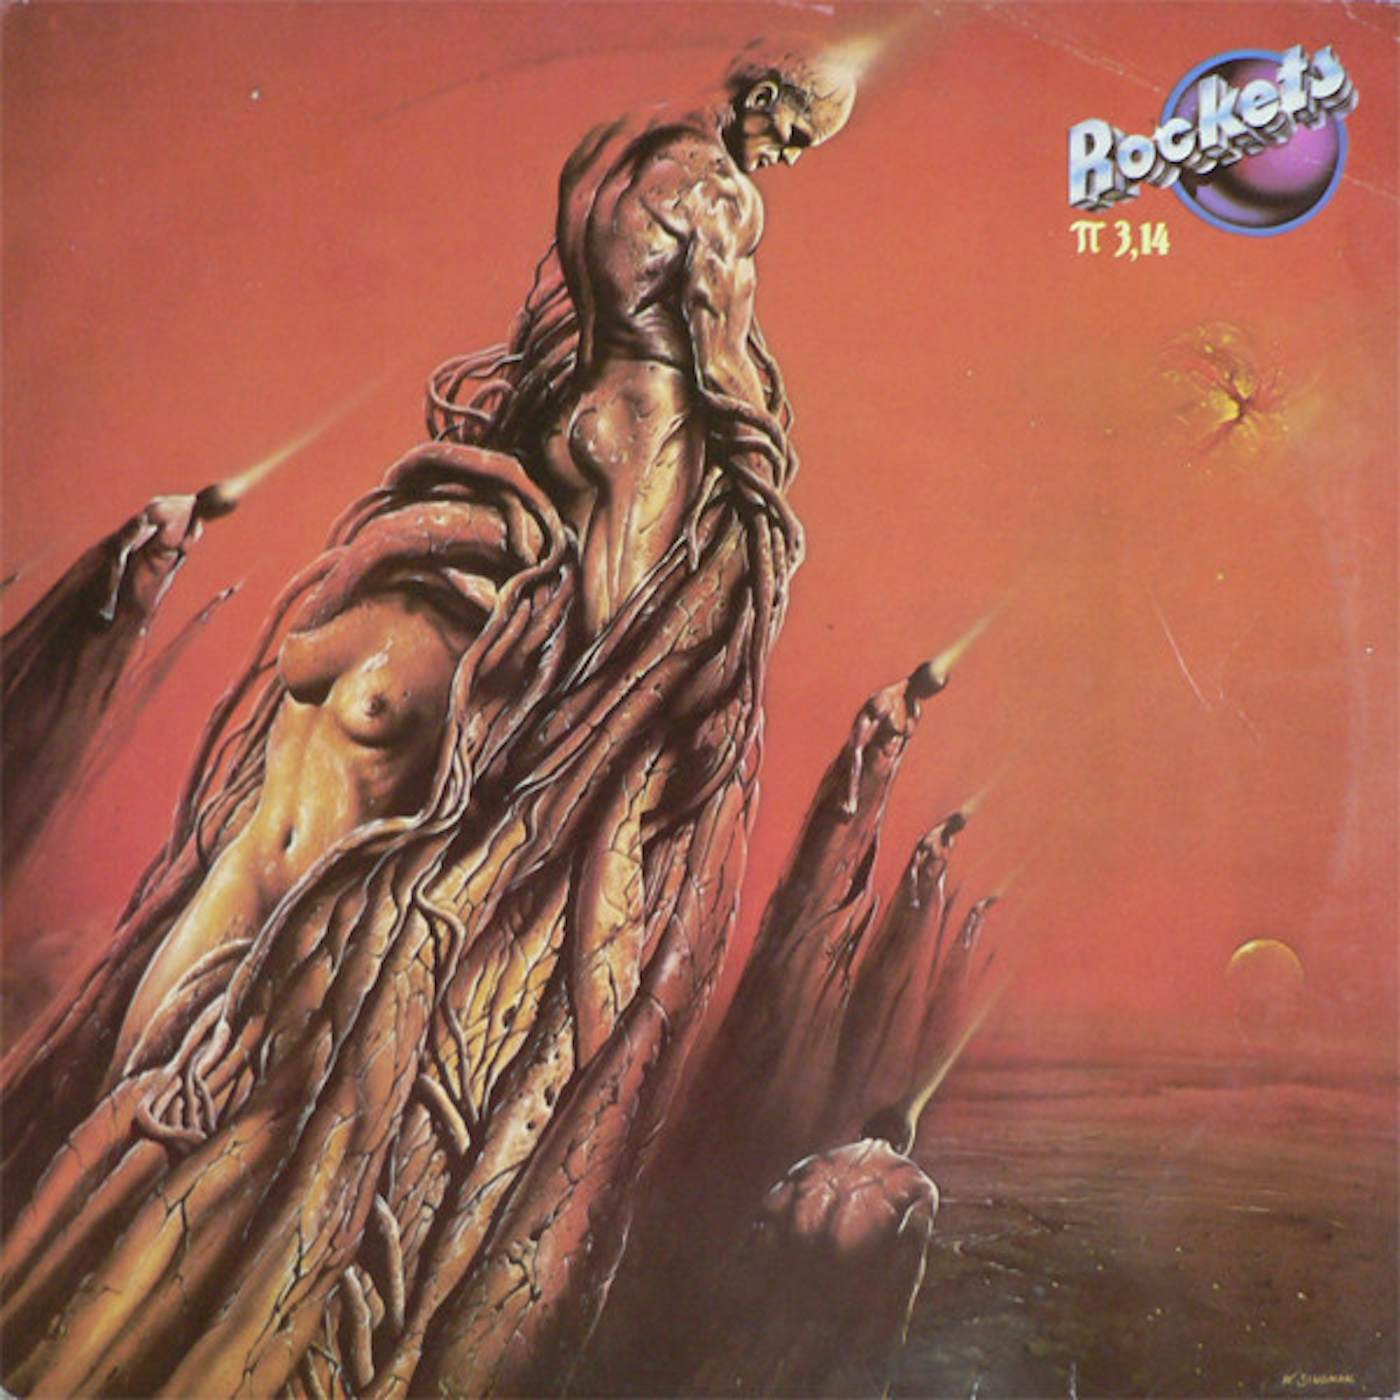 Rockets P 314 Vinyl Record